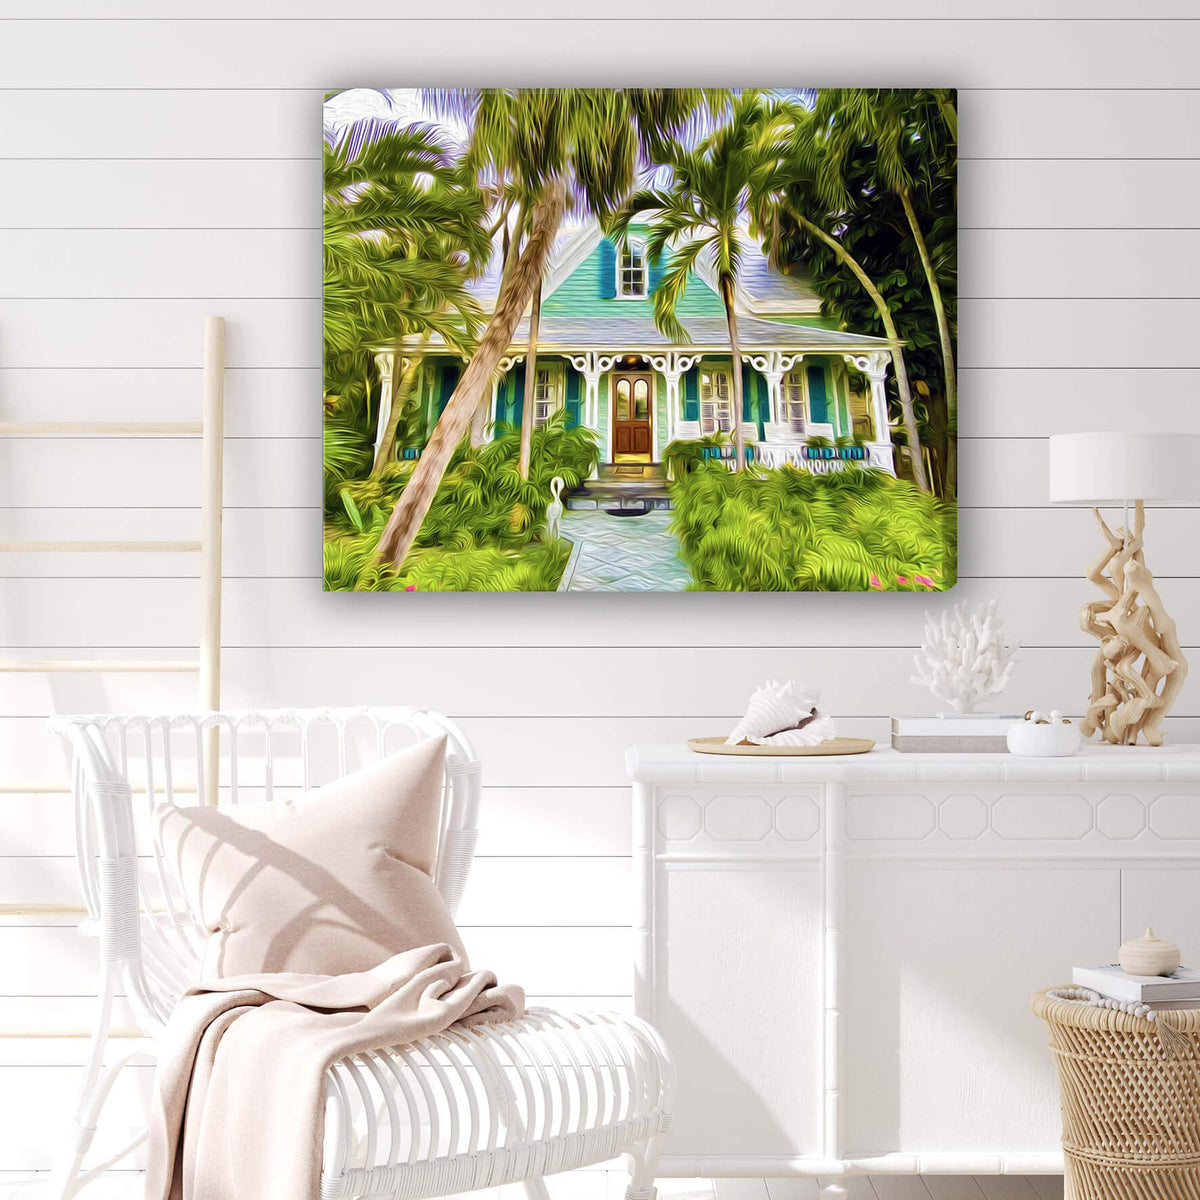 Key West Houses - Backyards of Key West Gallery